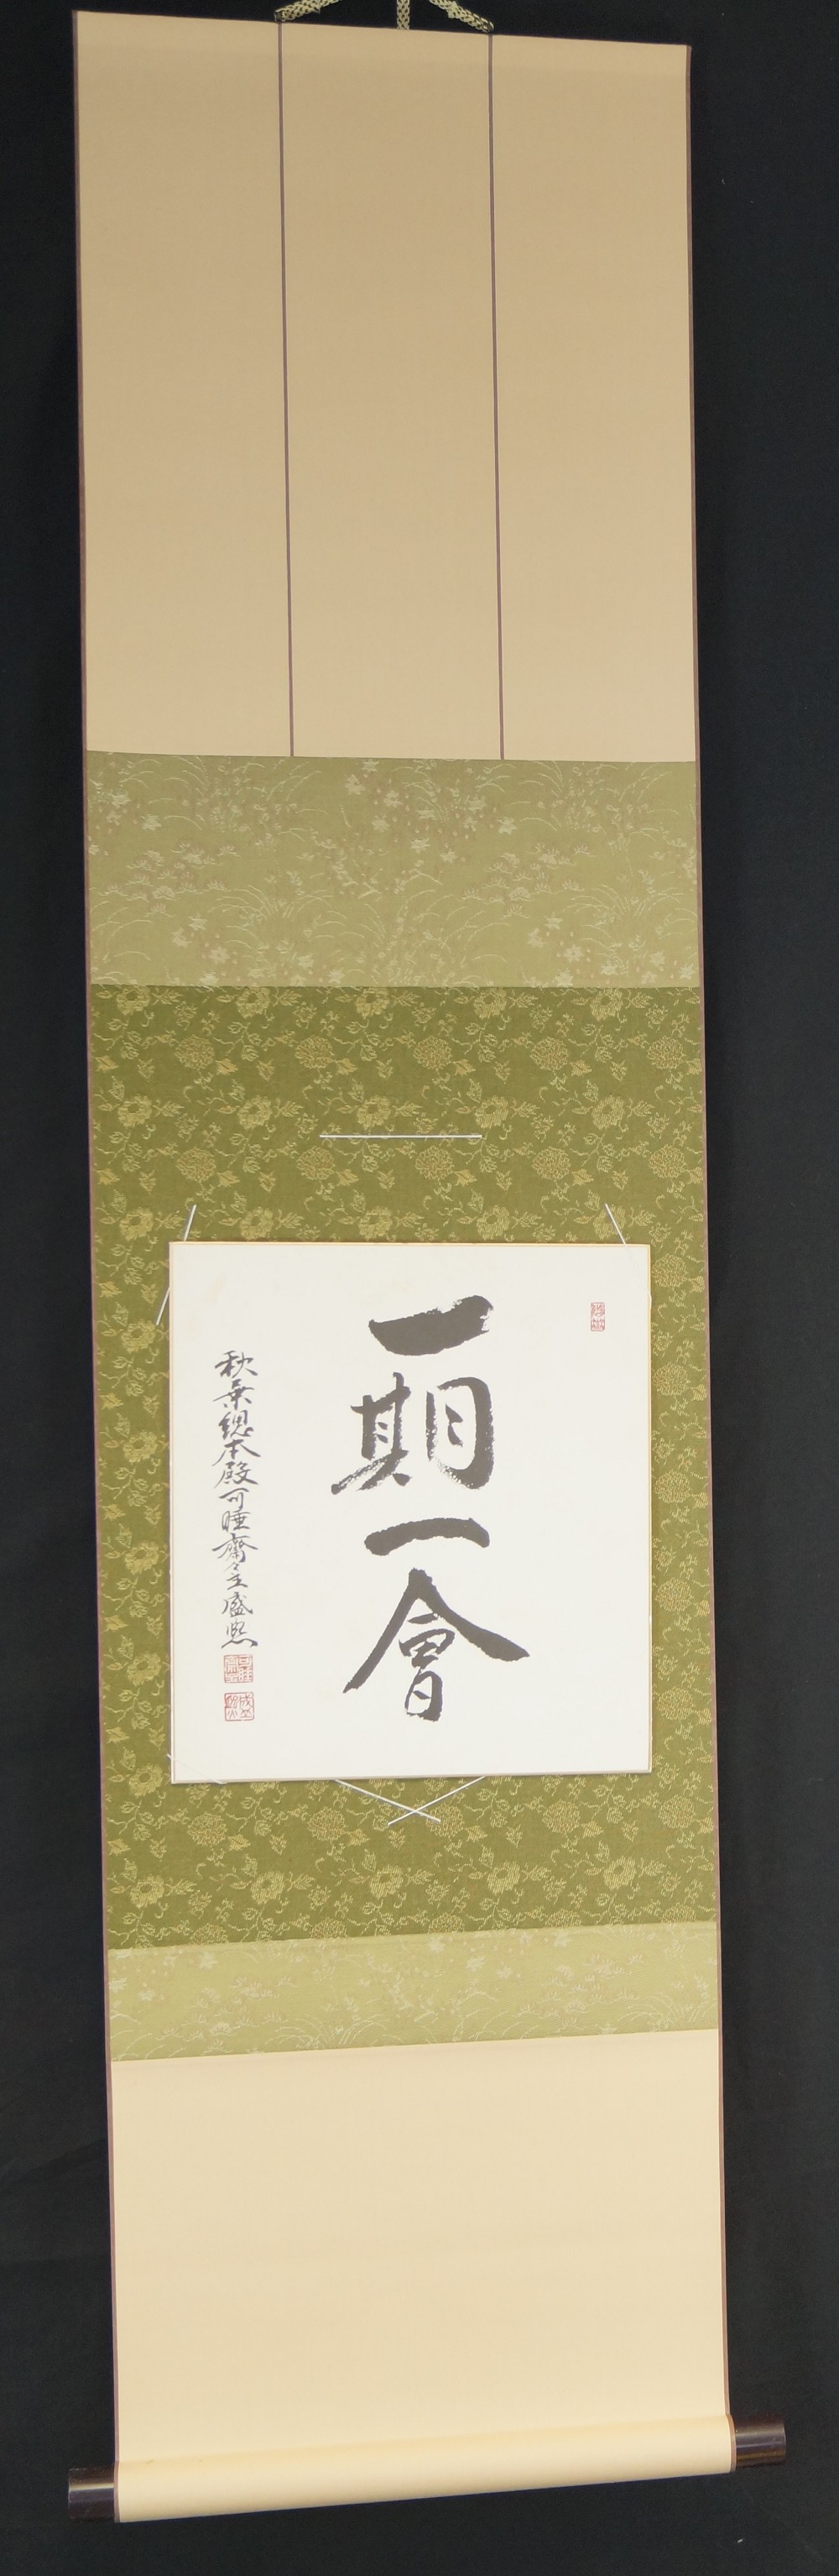 Shikishi - Kalligrafie "Jede Begegnung ist einmalig"